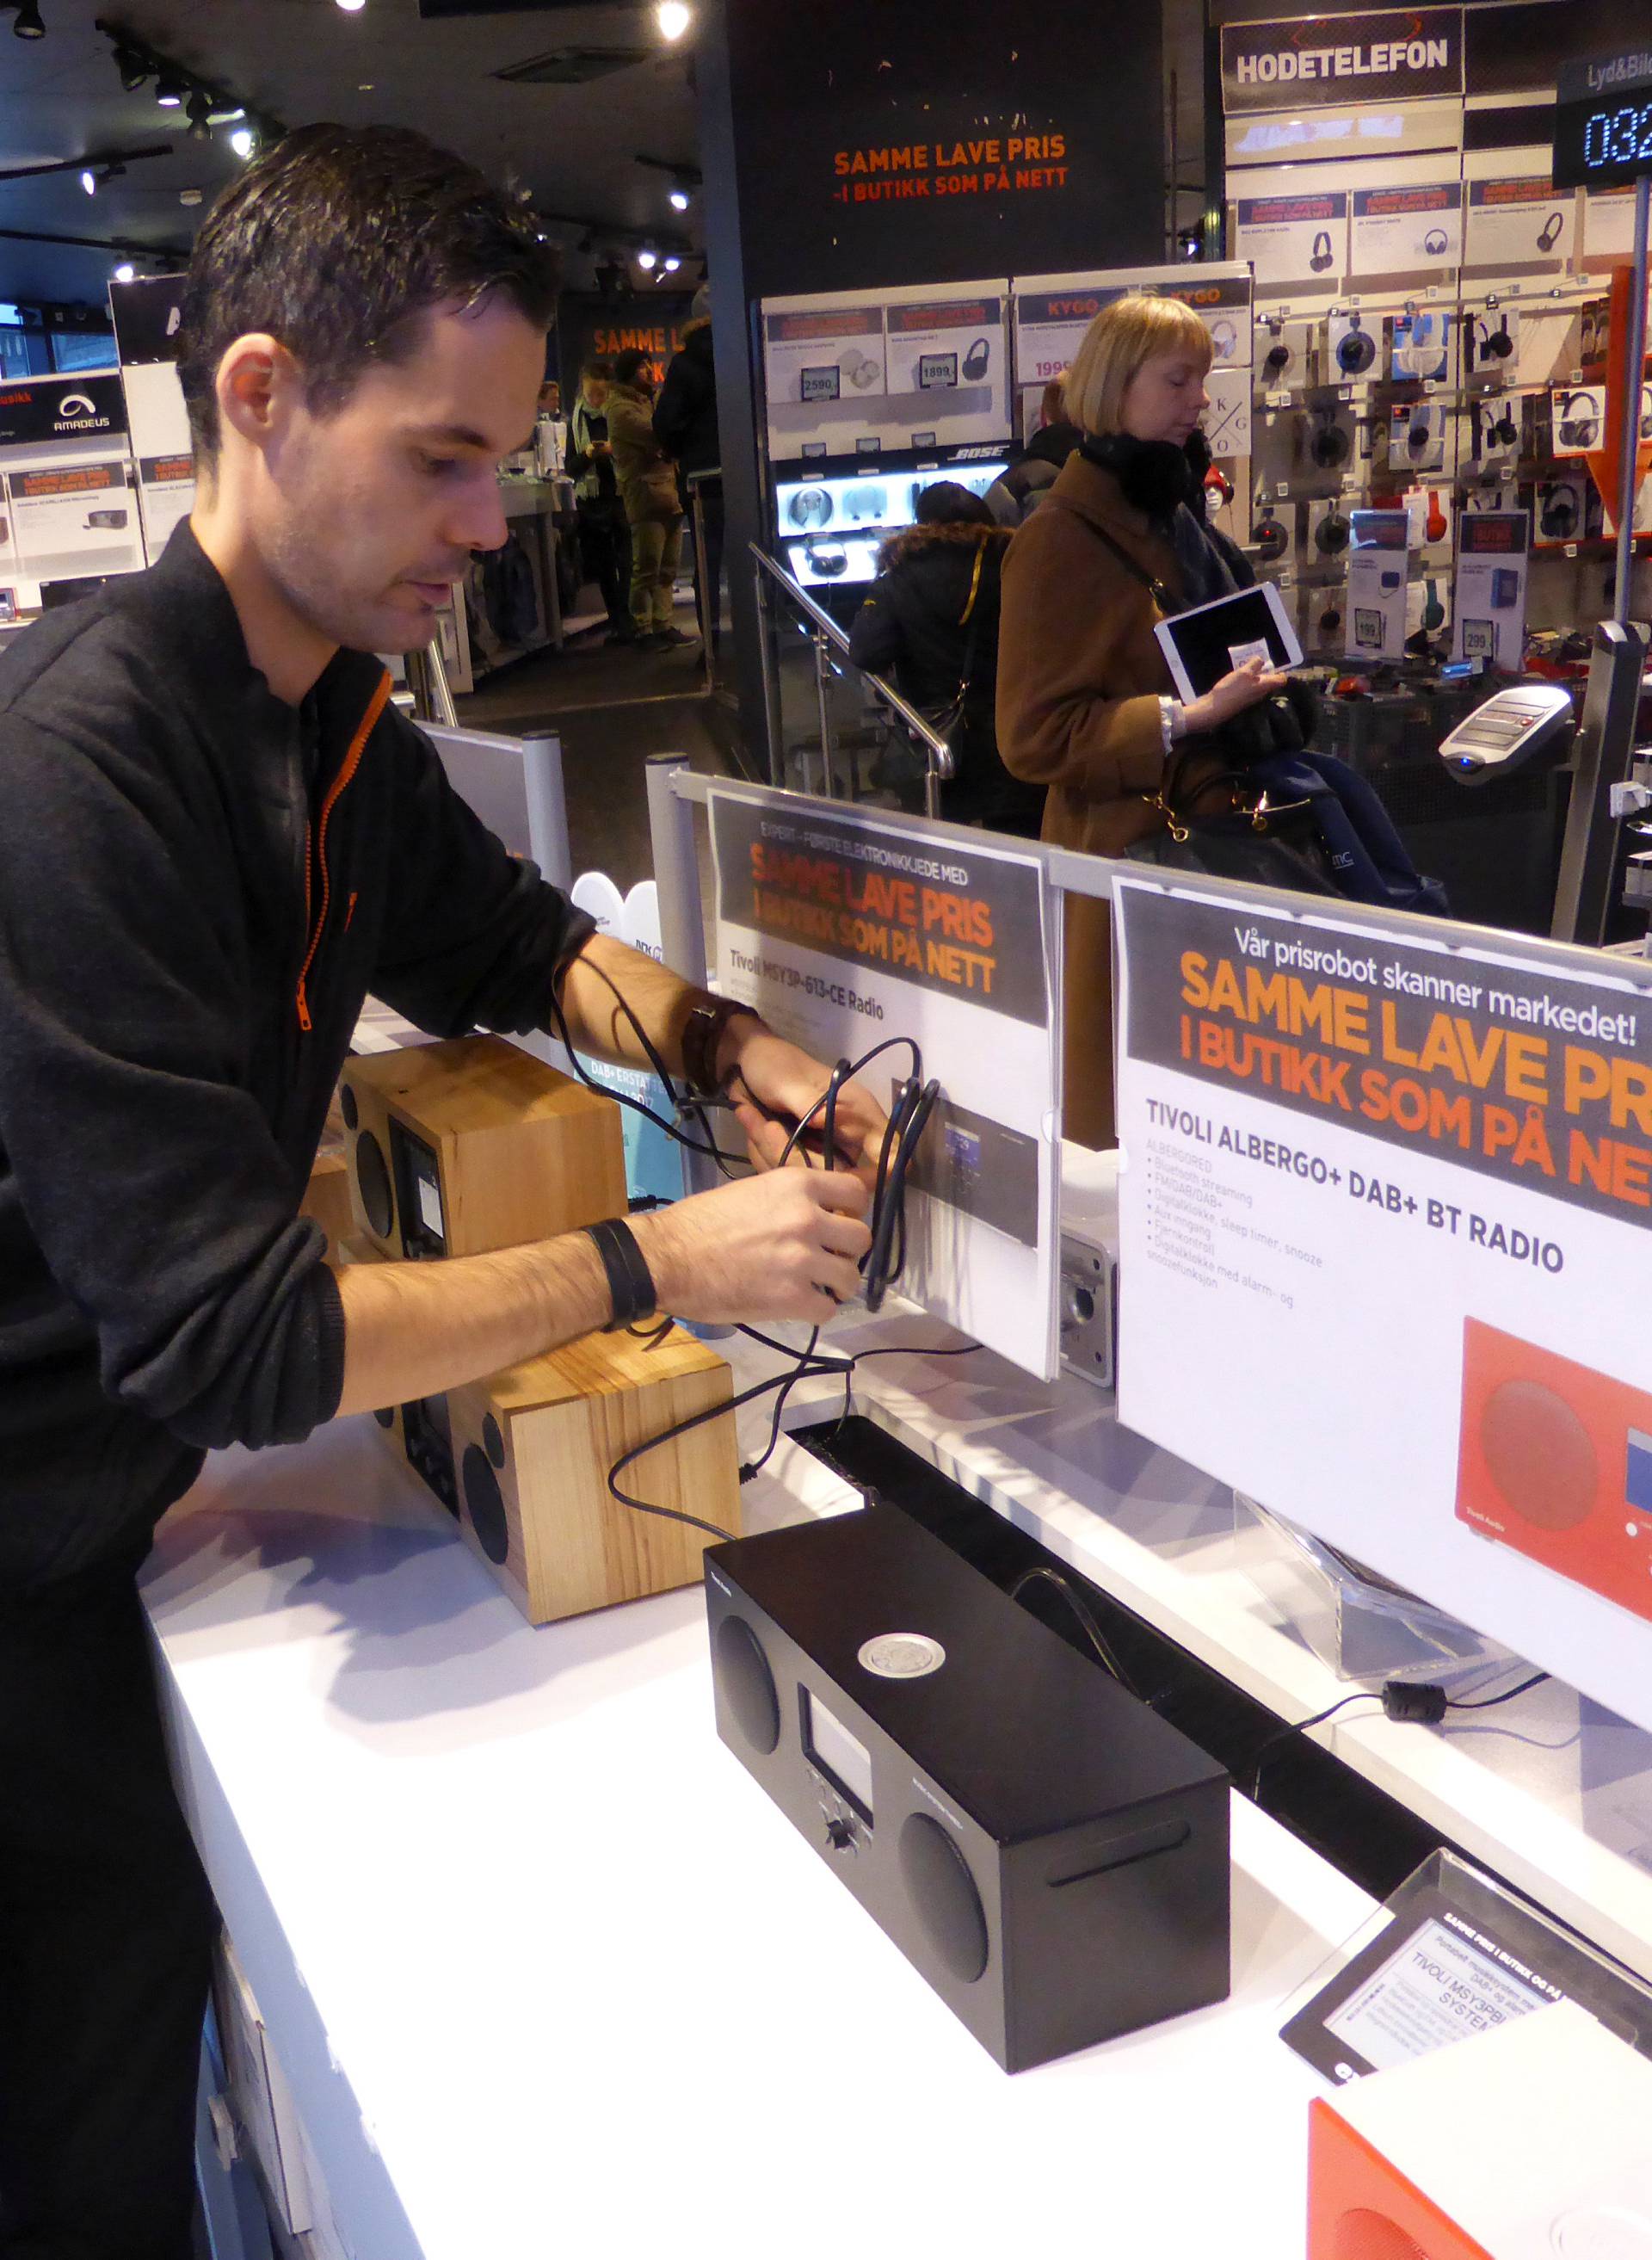 Worker Nilsen arranges digital radios in an Expert City electronics shop in Oslo